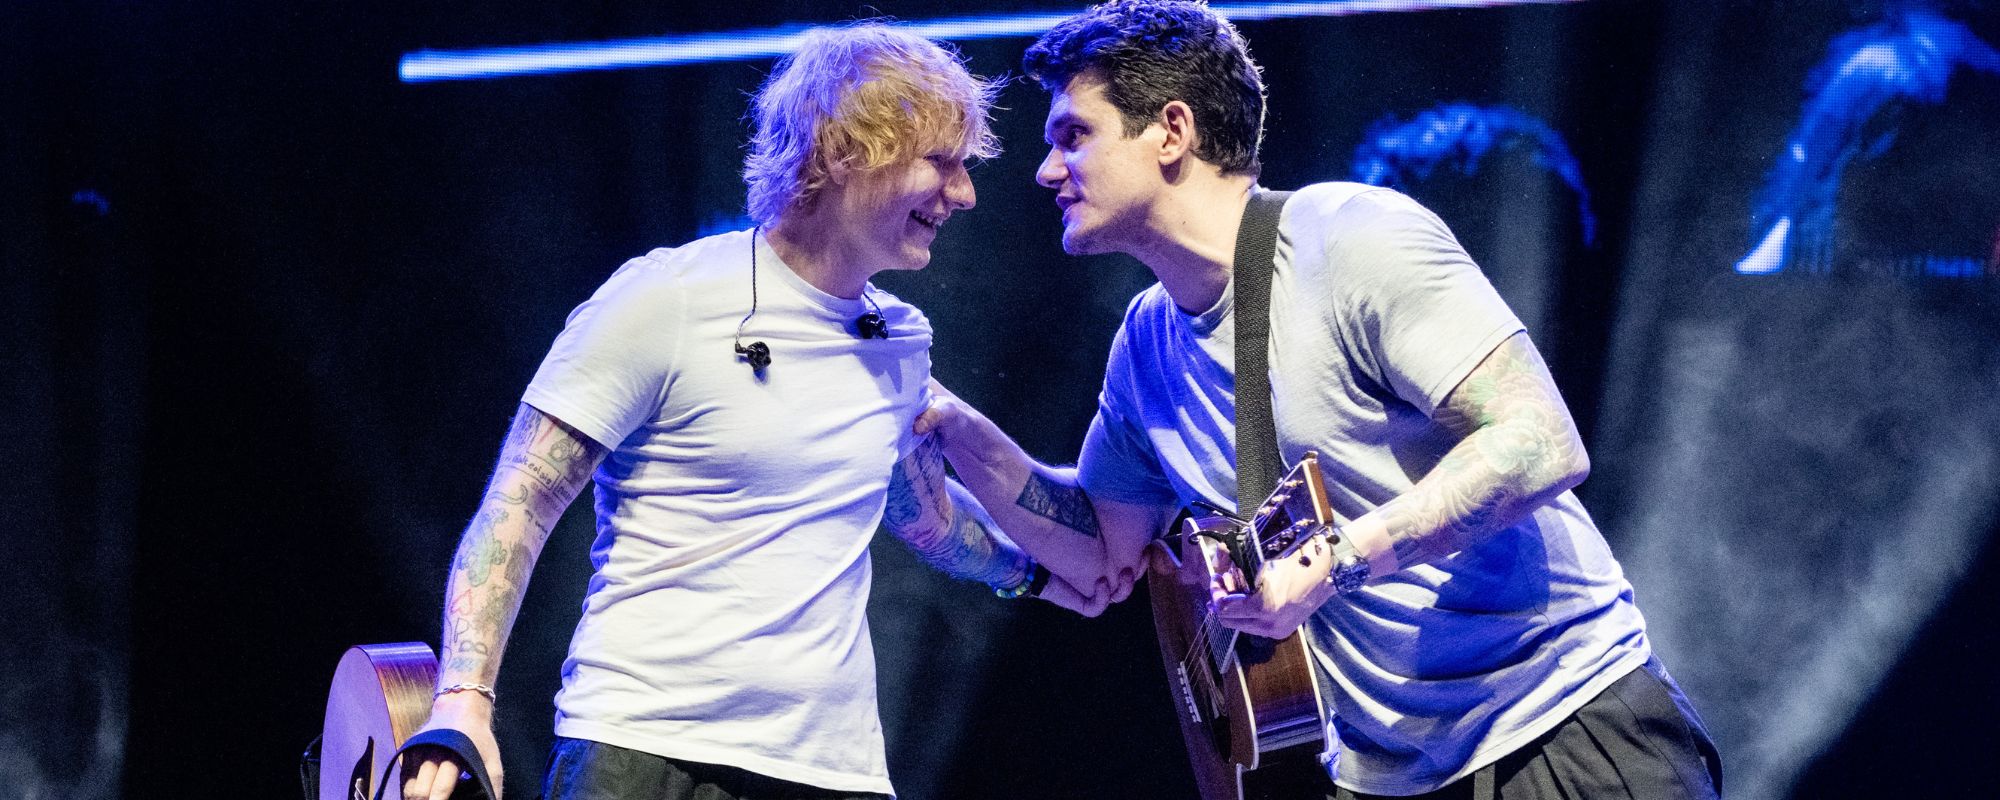 John Mayer and Ed Sheeran Cover Tom Petty’s “Free Fallin'” in Los Angeles